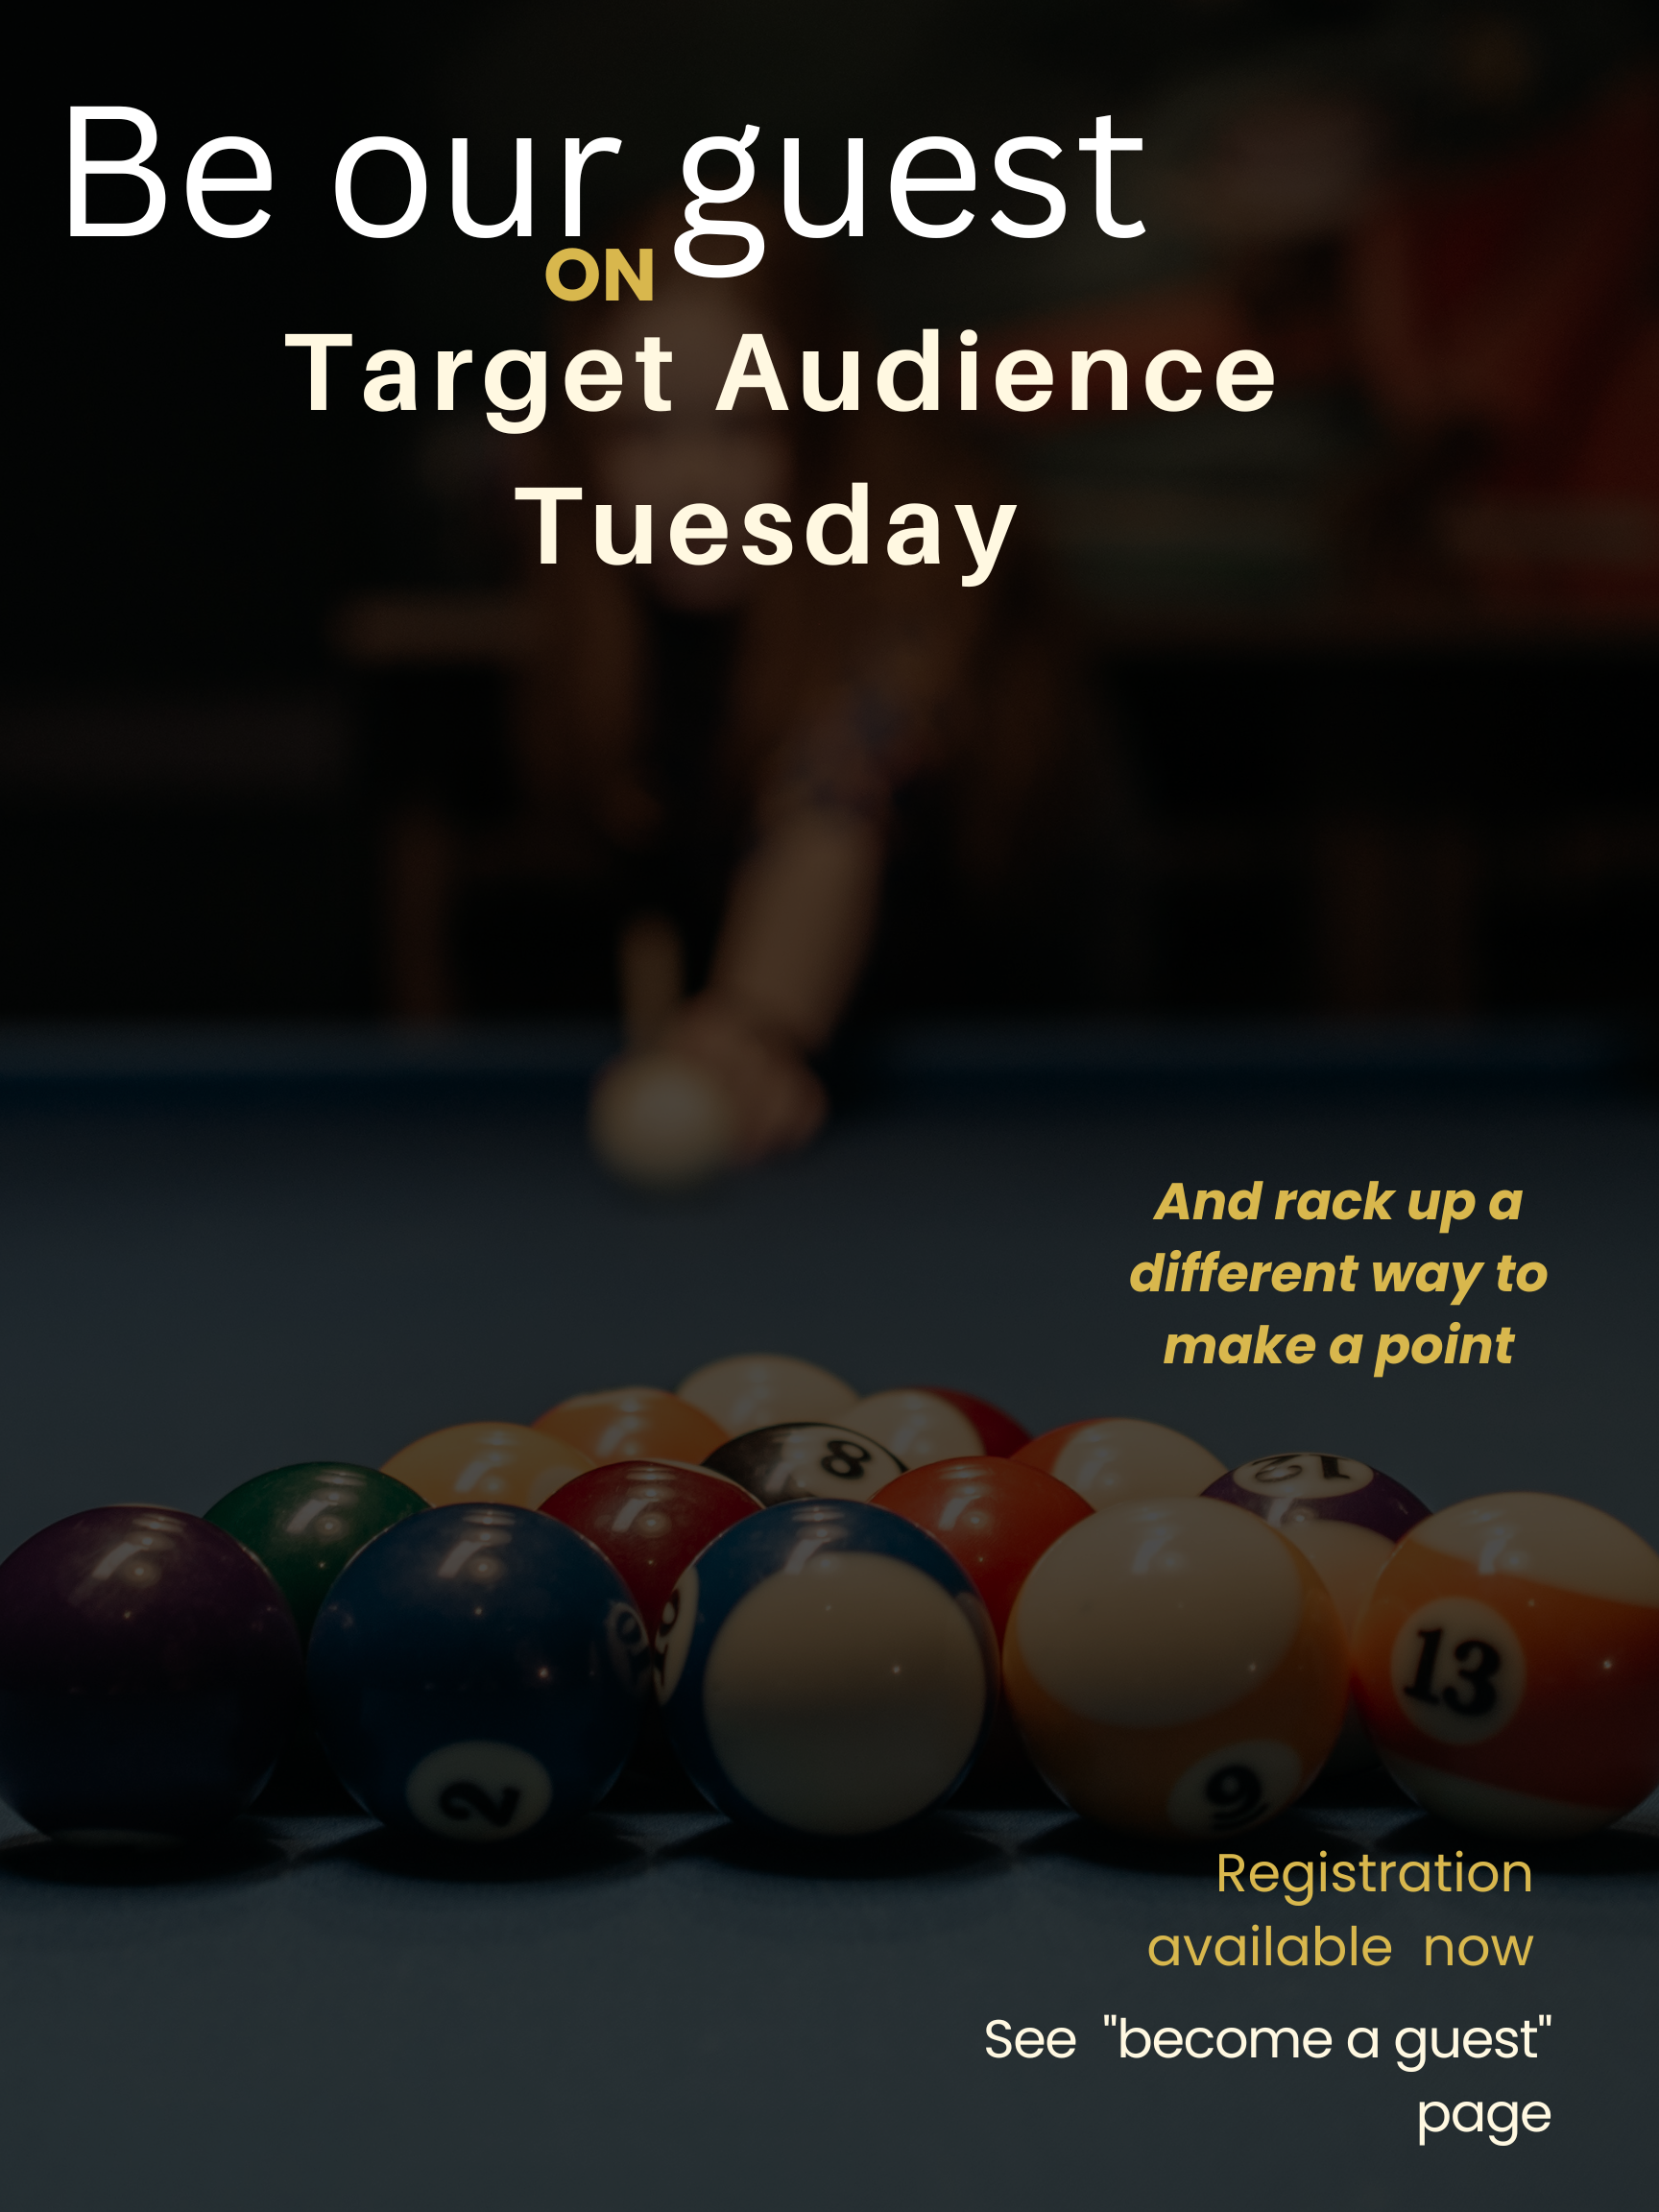 Week 1 Flyer: Target Audience Tuesday